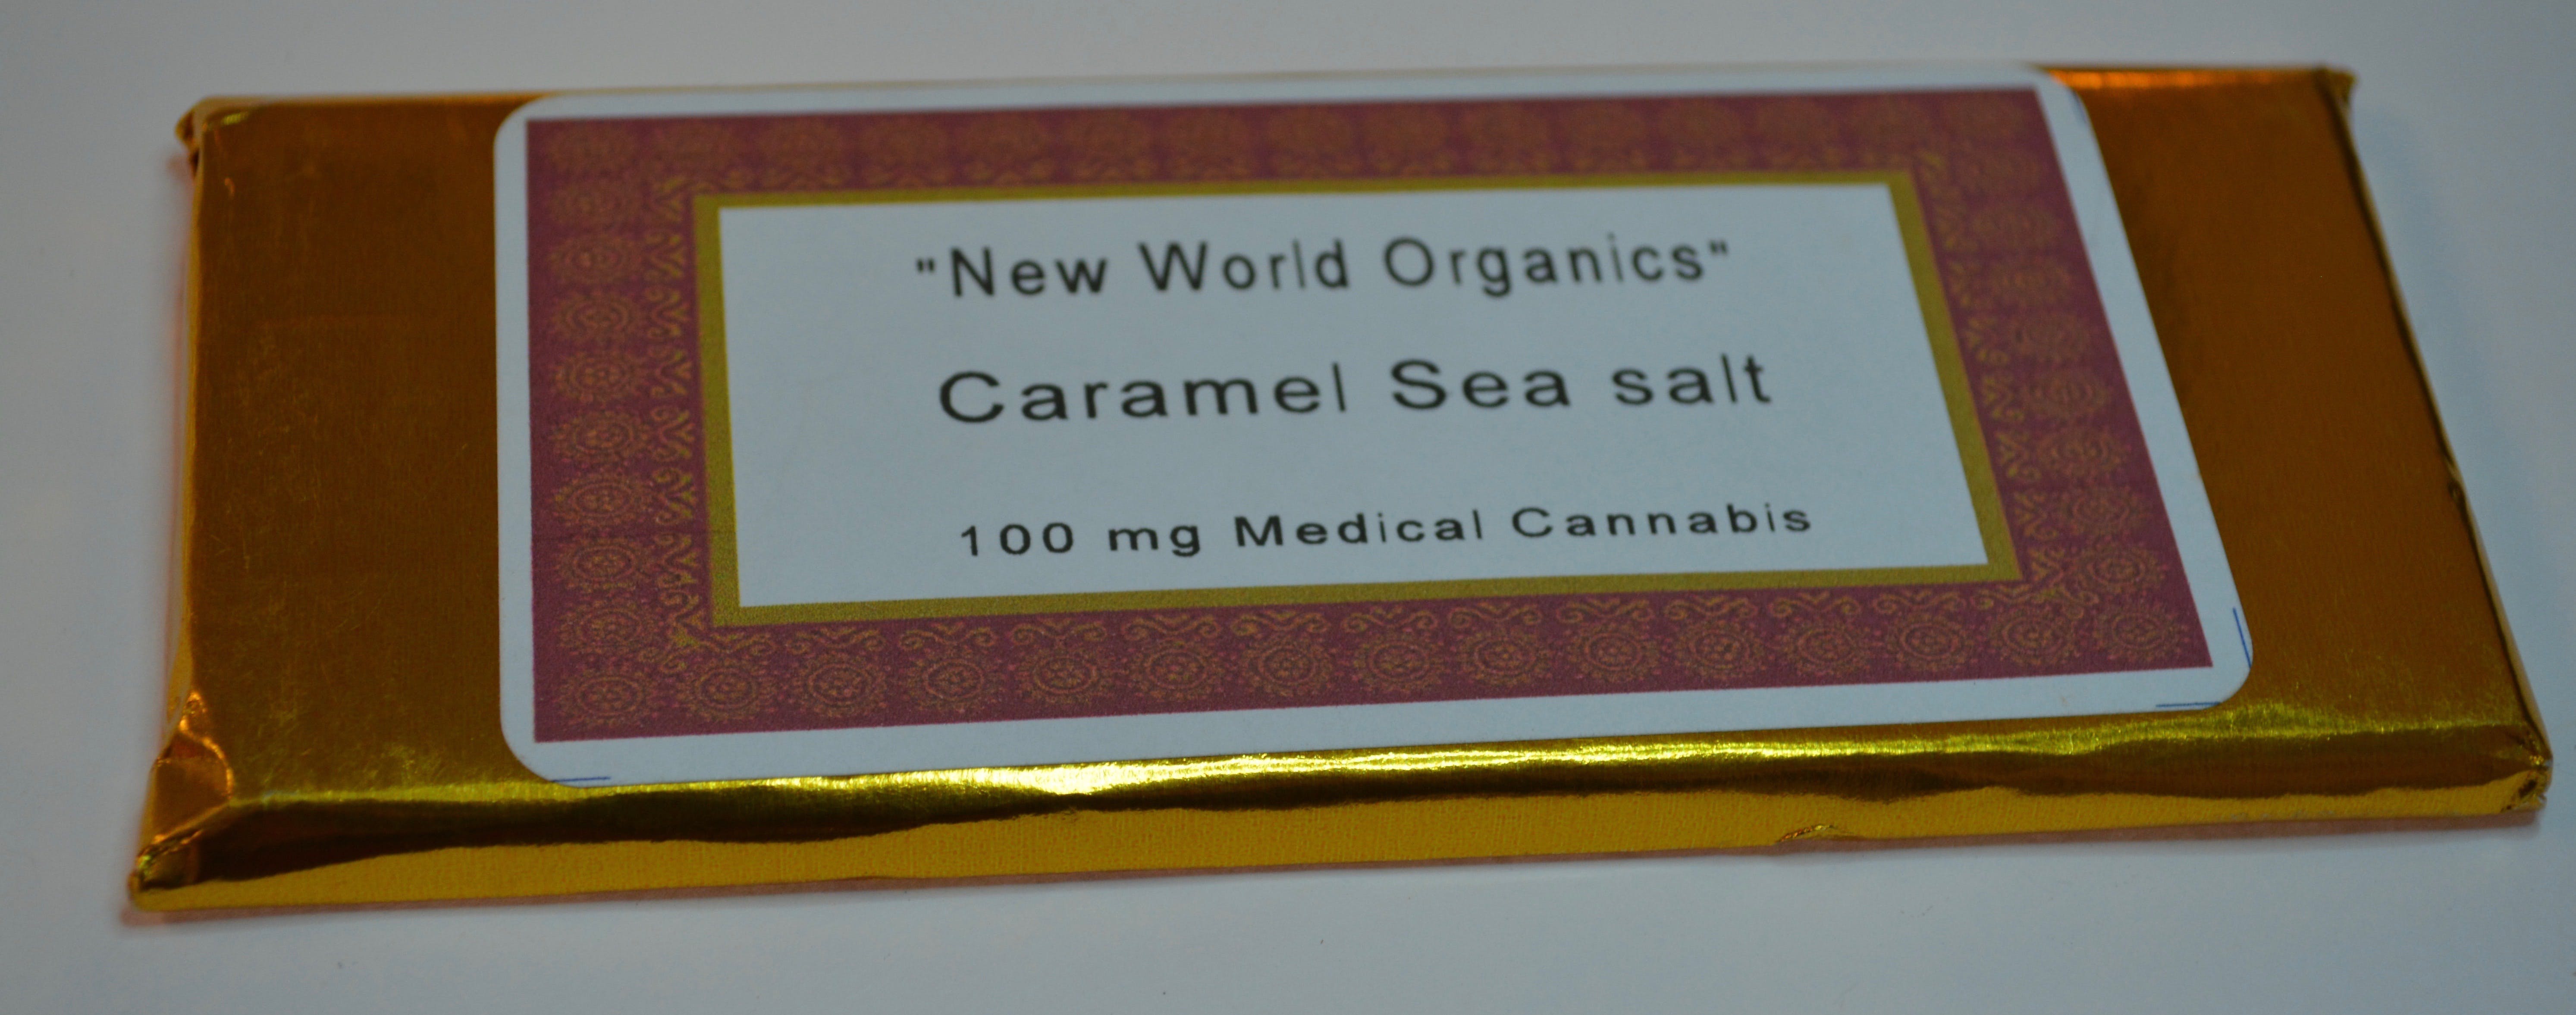 edible-nwo-carmel-and-sea-salt